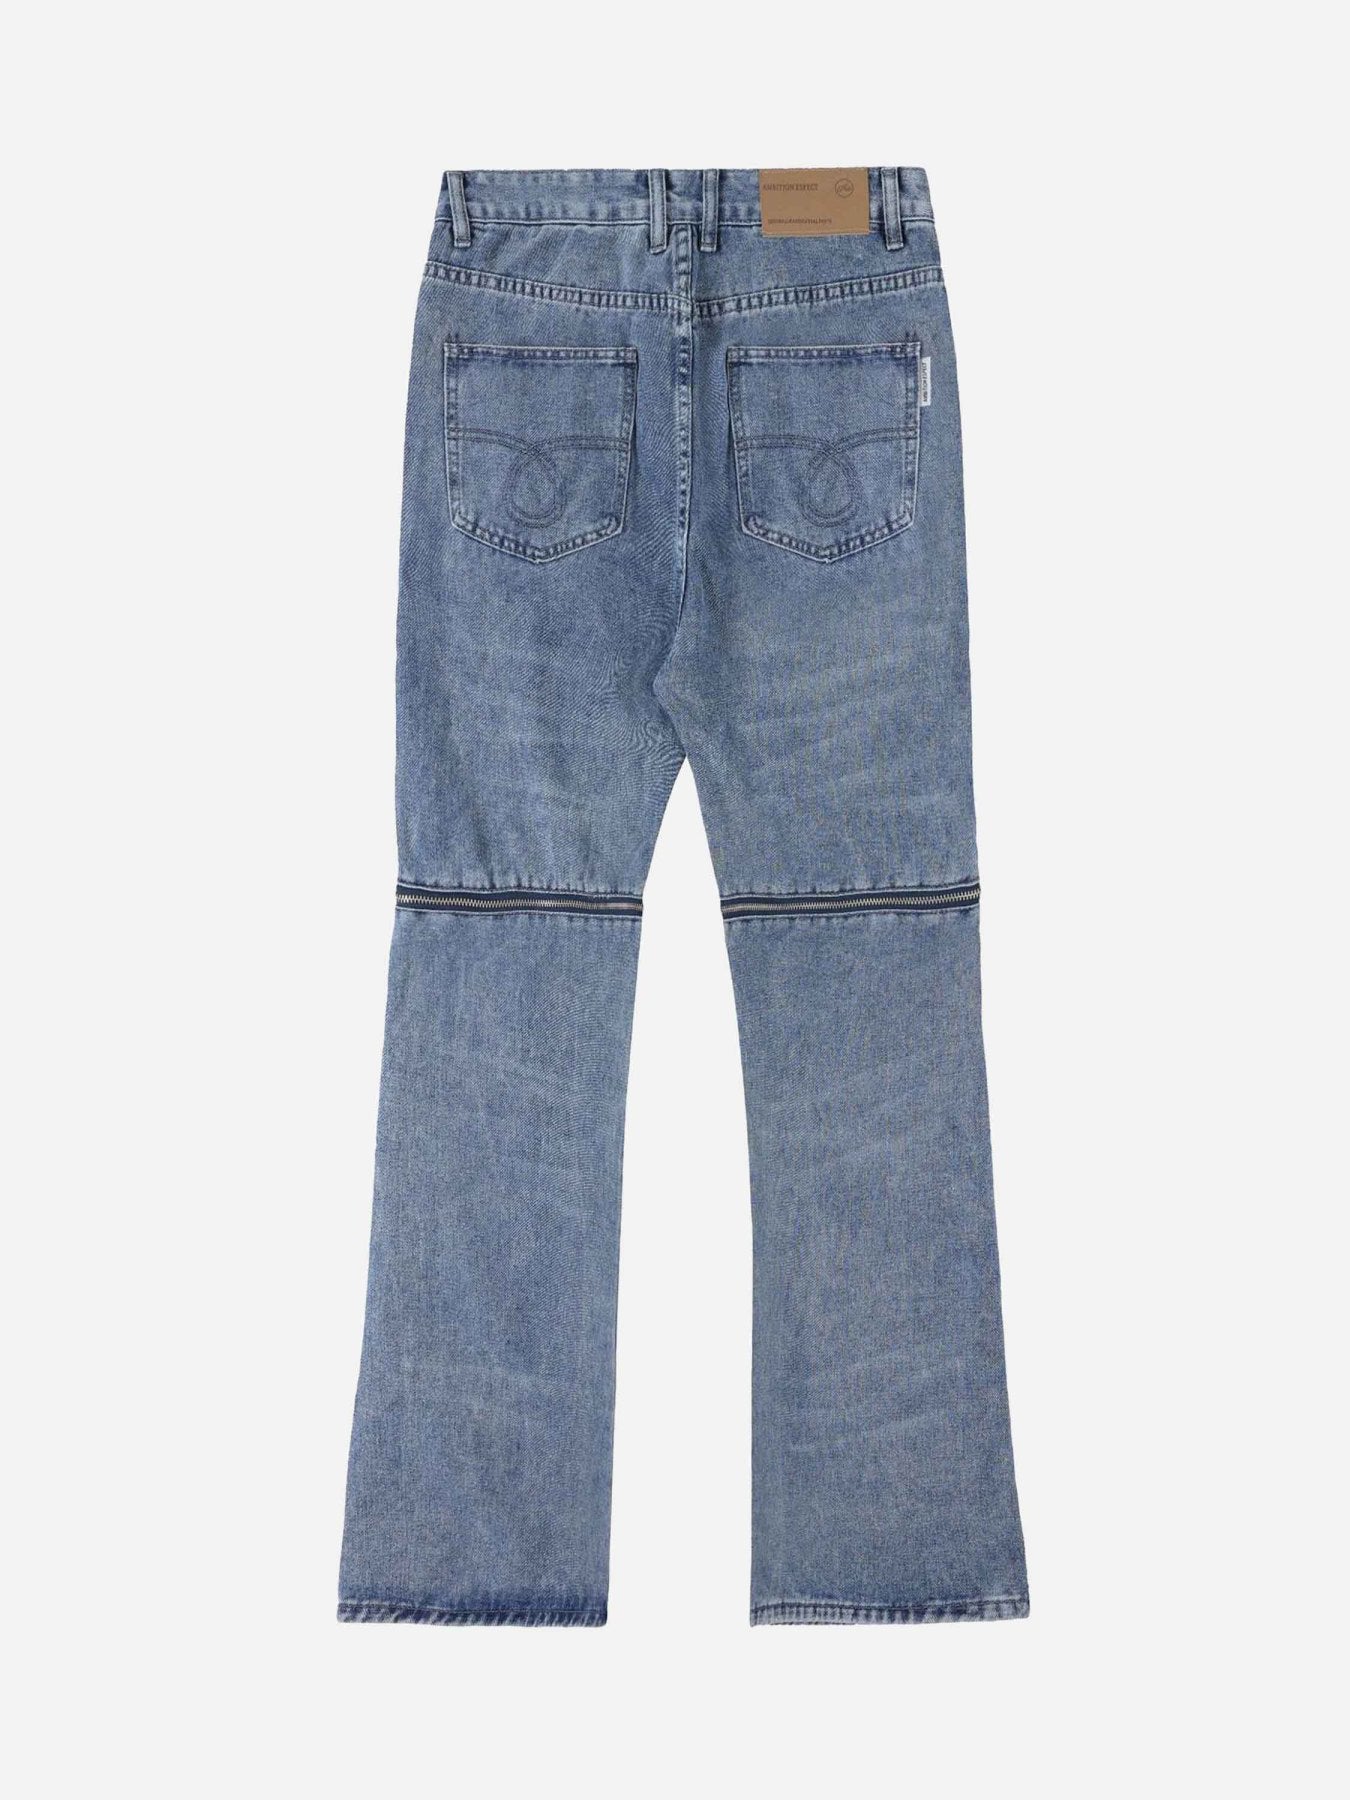 The Supermade Multi-Pocket Zipper Detachable Jeans